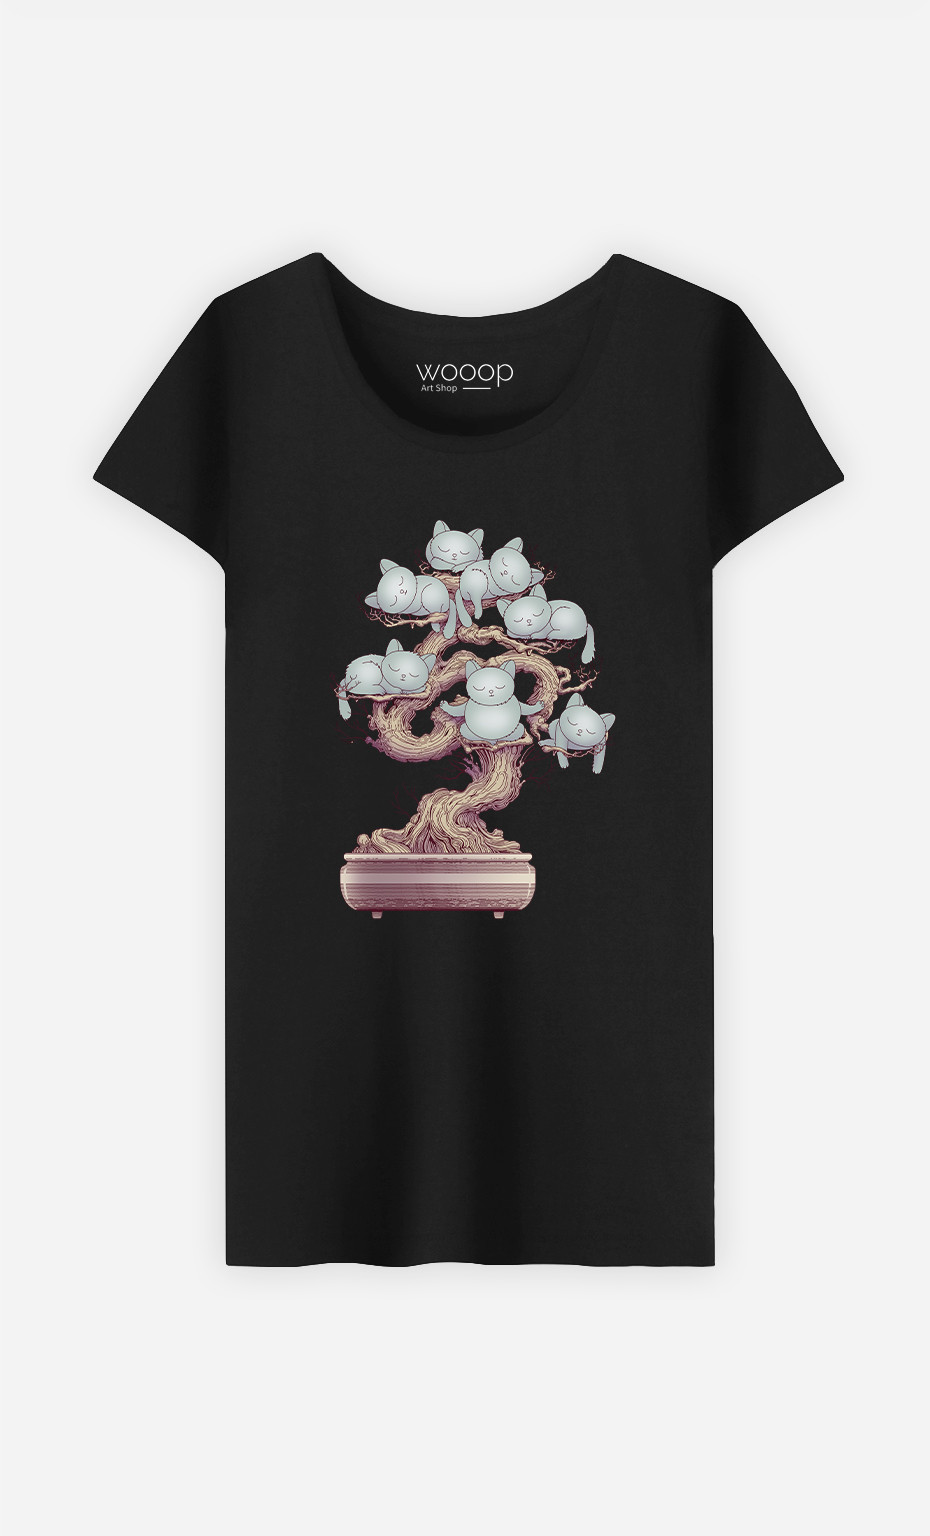 Frau T-Shirt Zen